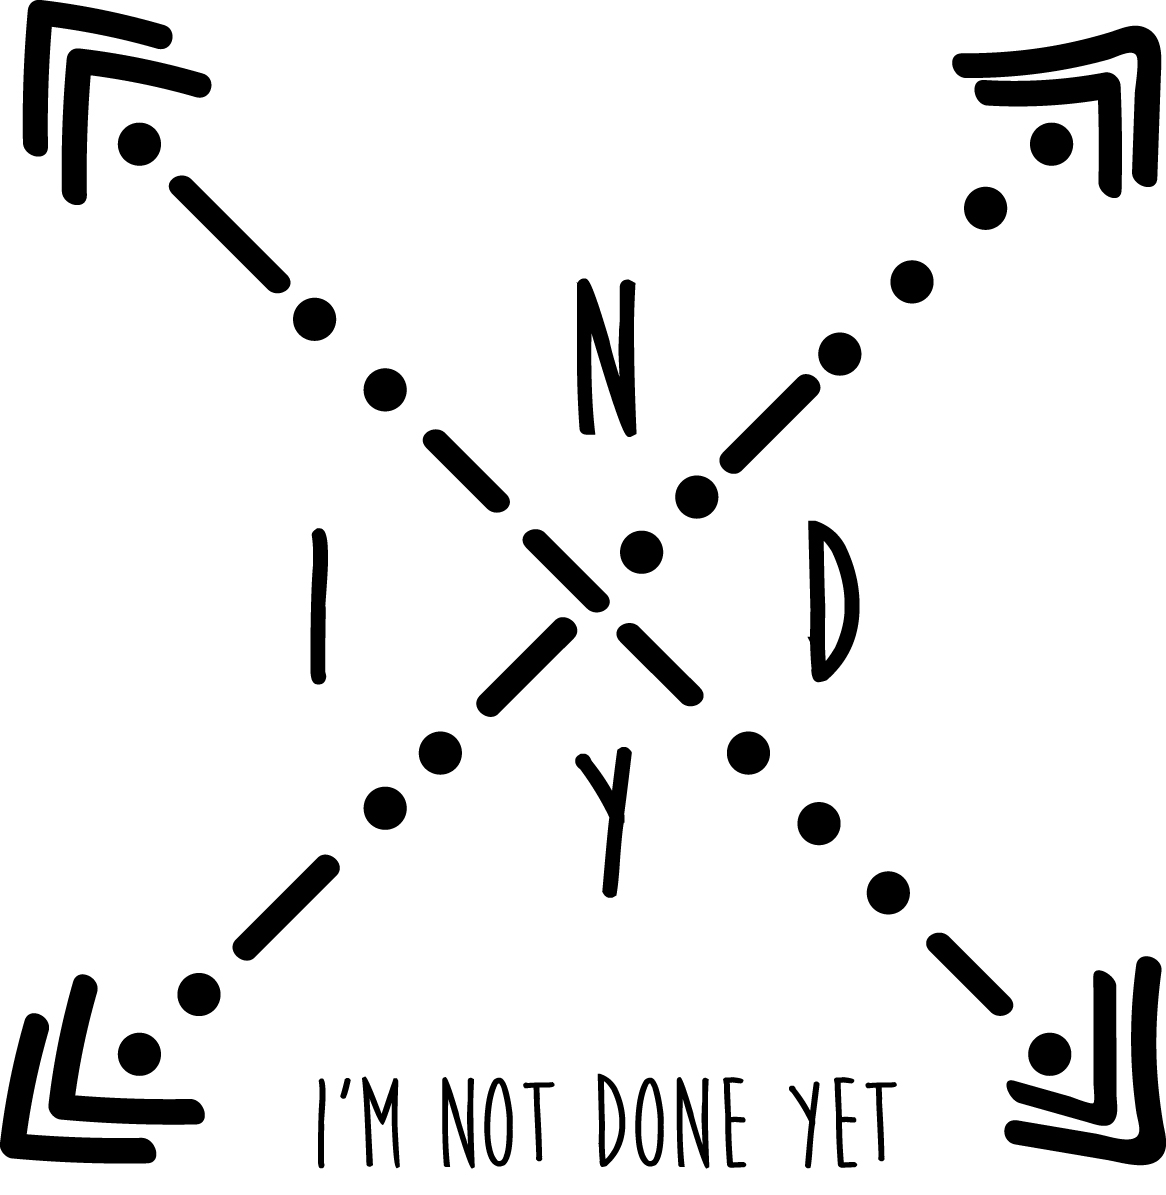 INDY Foundation logo